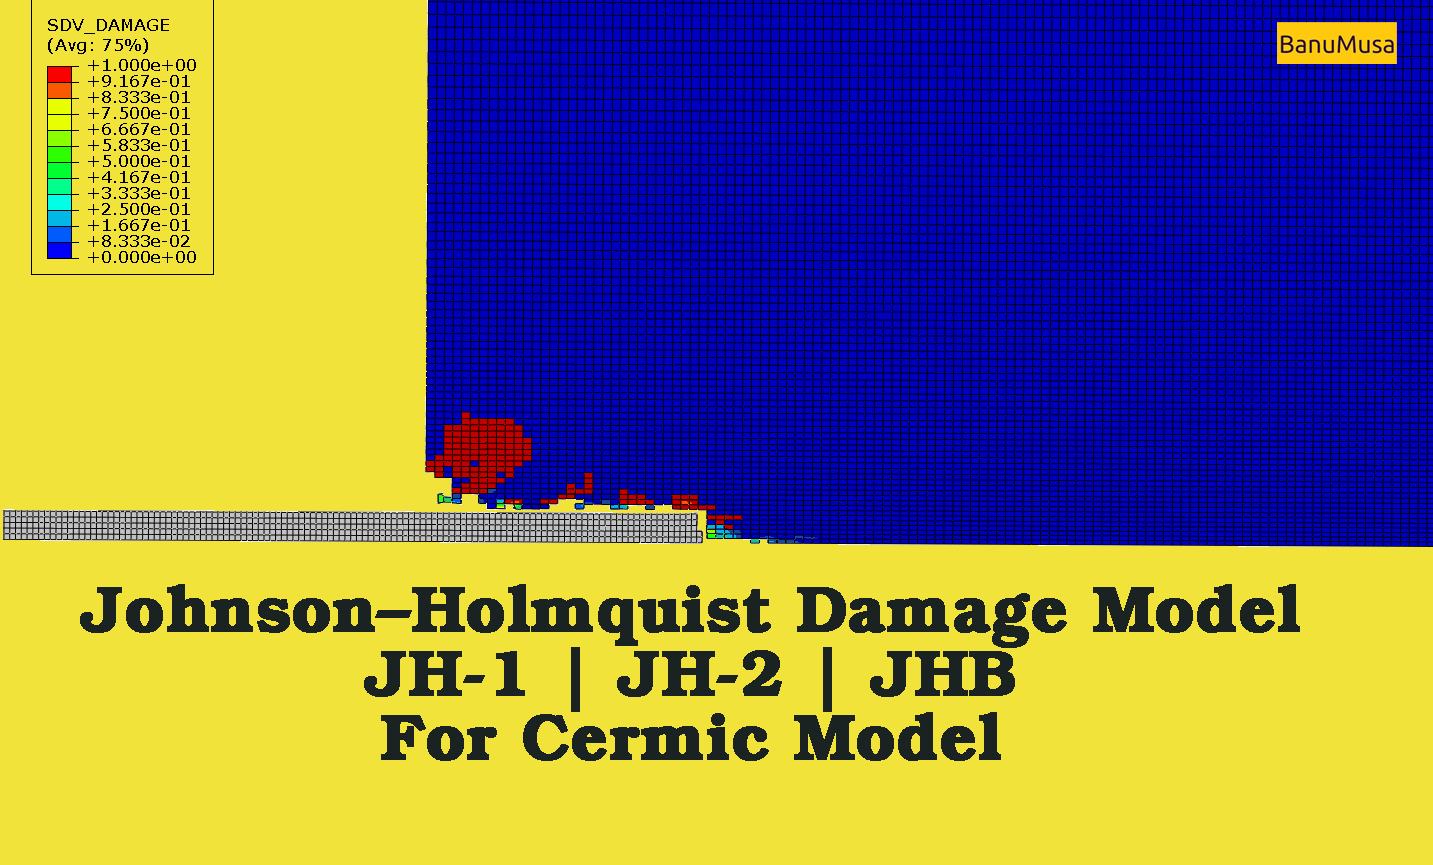 Johnson–Holmquist damage model JH-1 JH-2 Abaqus VUMAT JHB and JH-2 Ceramic Model